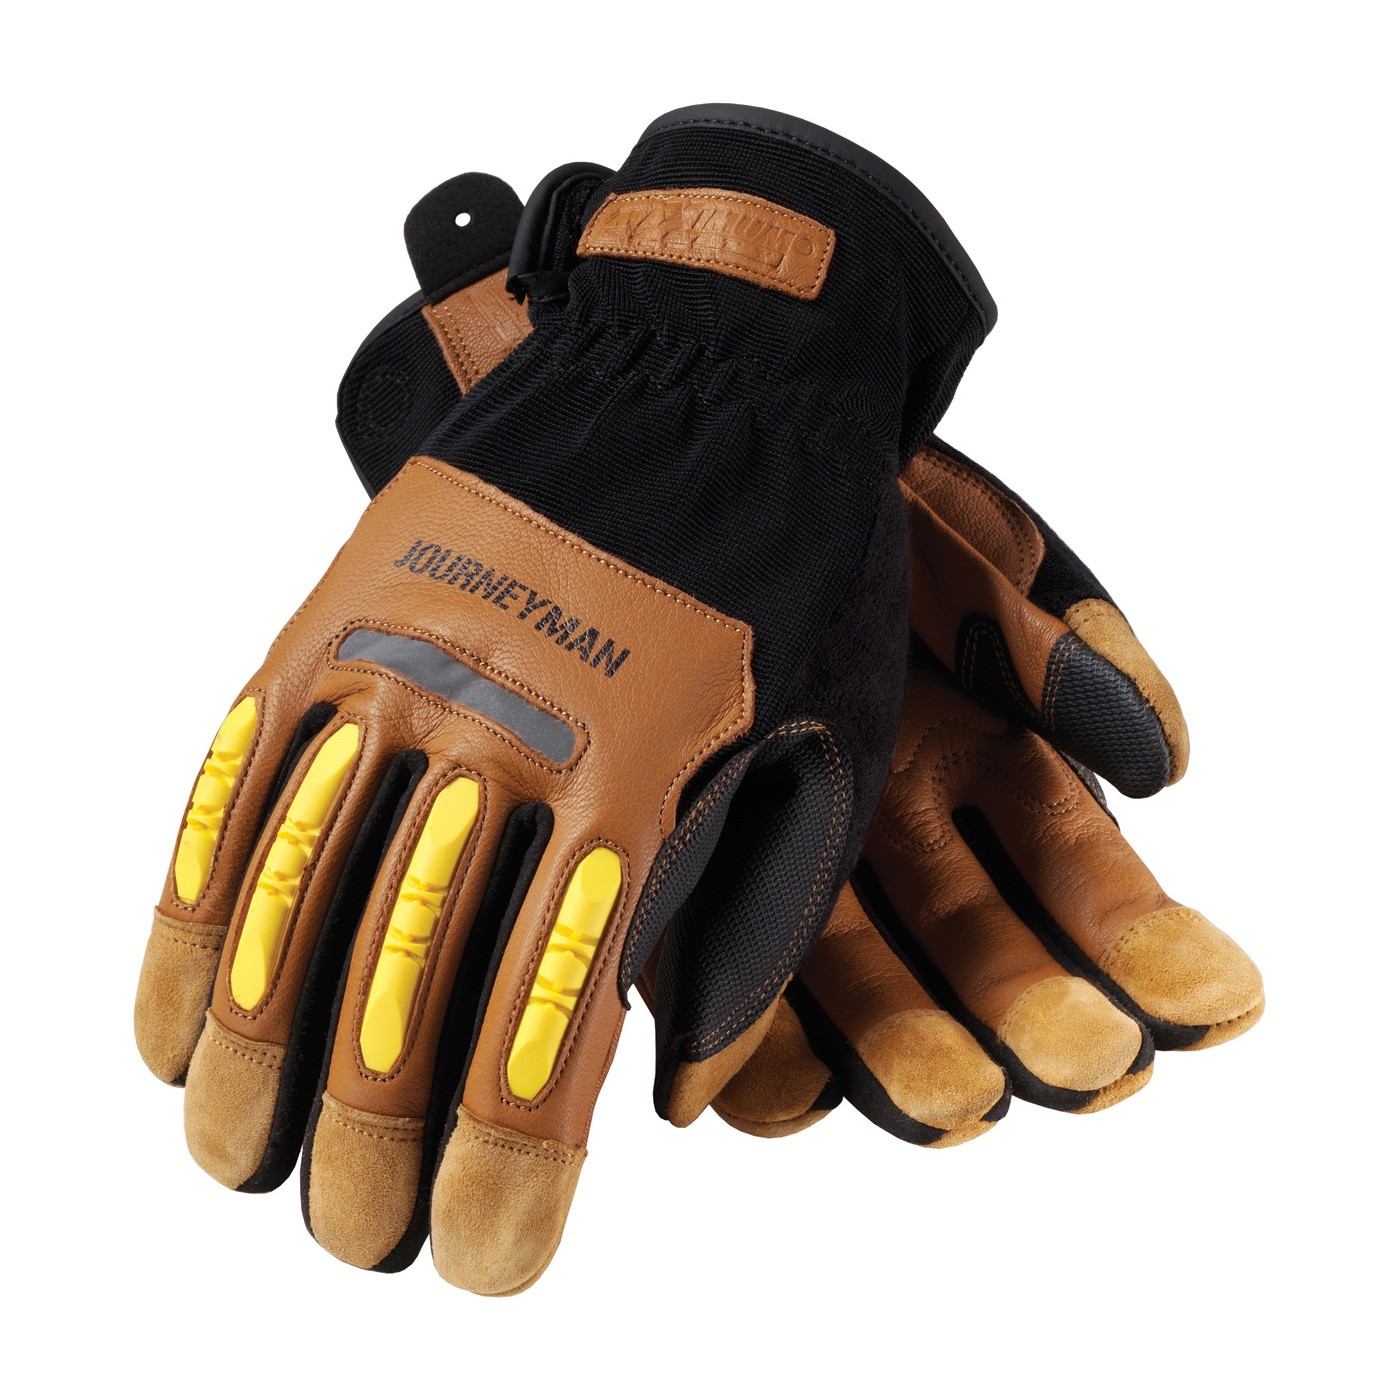 JOURNEYMAN, Reinforced Goatskin Leather Palm, TPR on Fingers Size 2X-Large